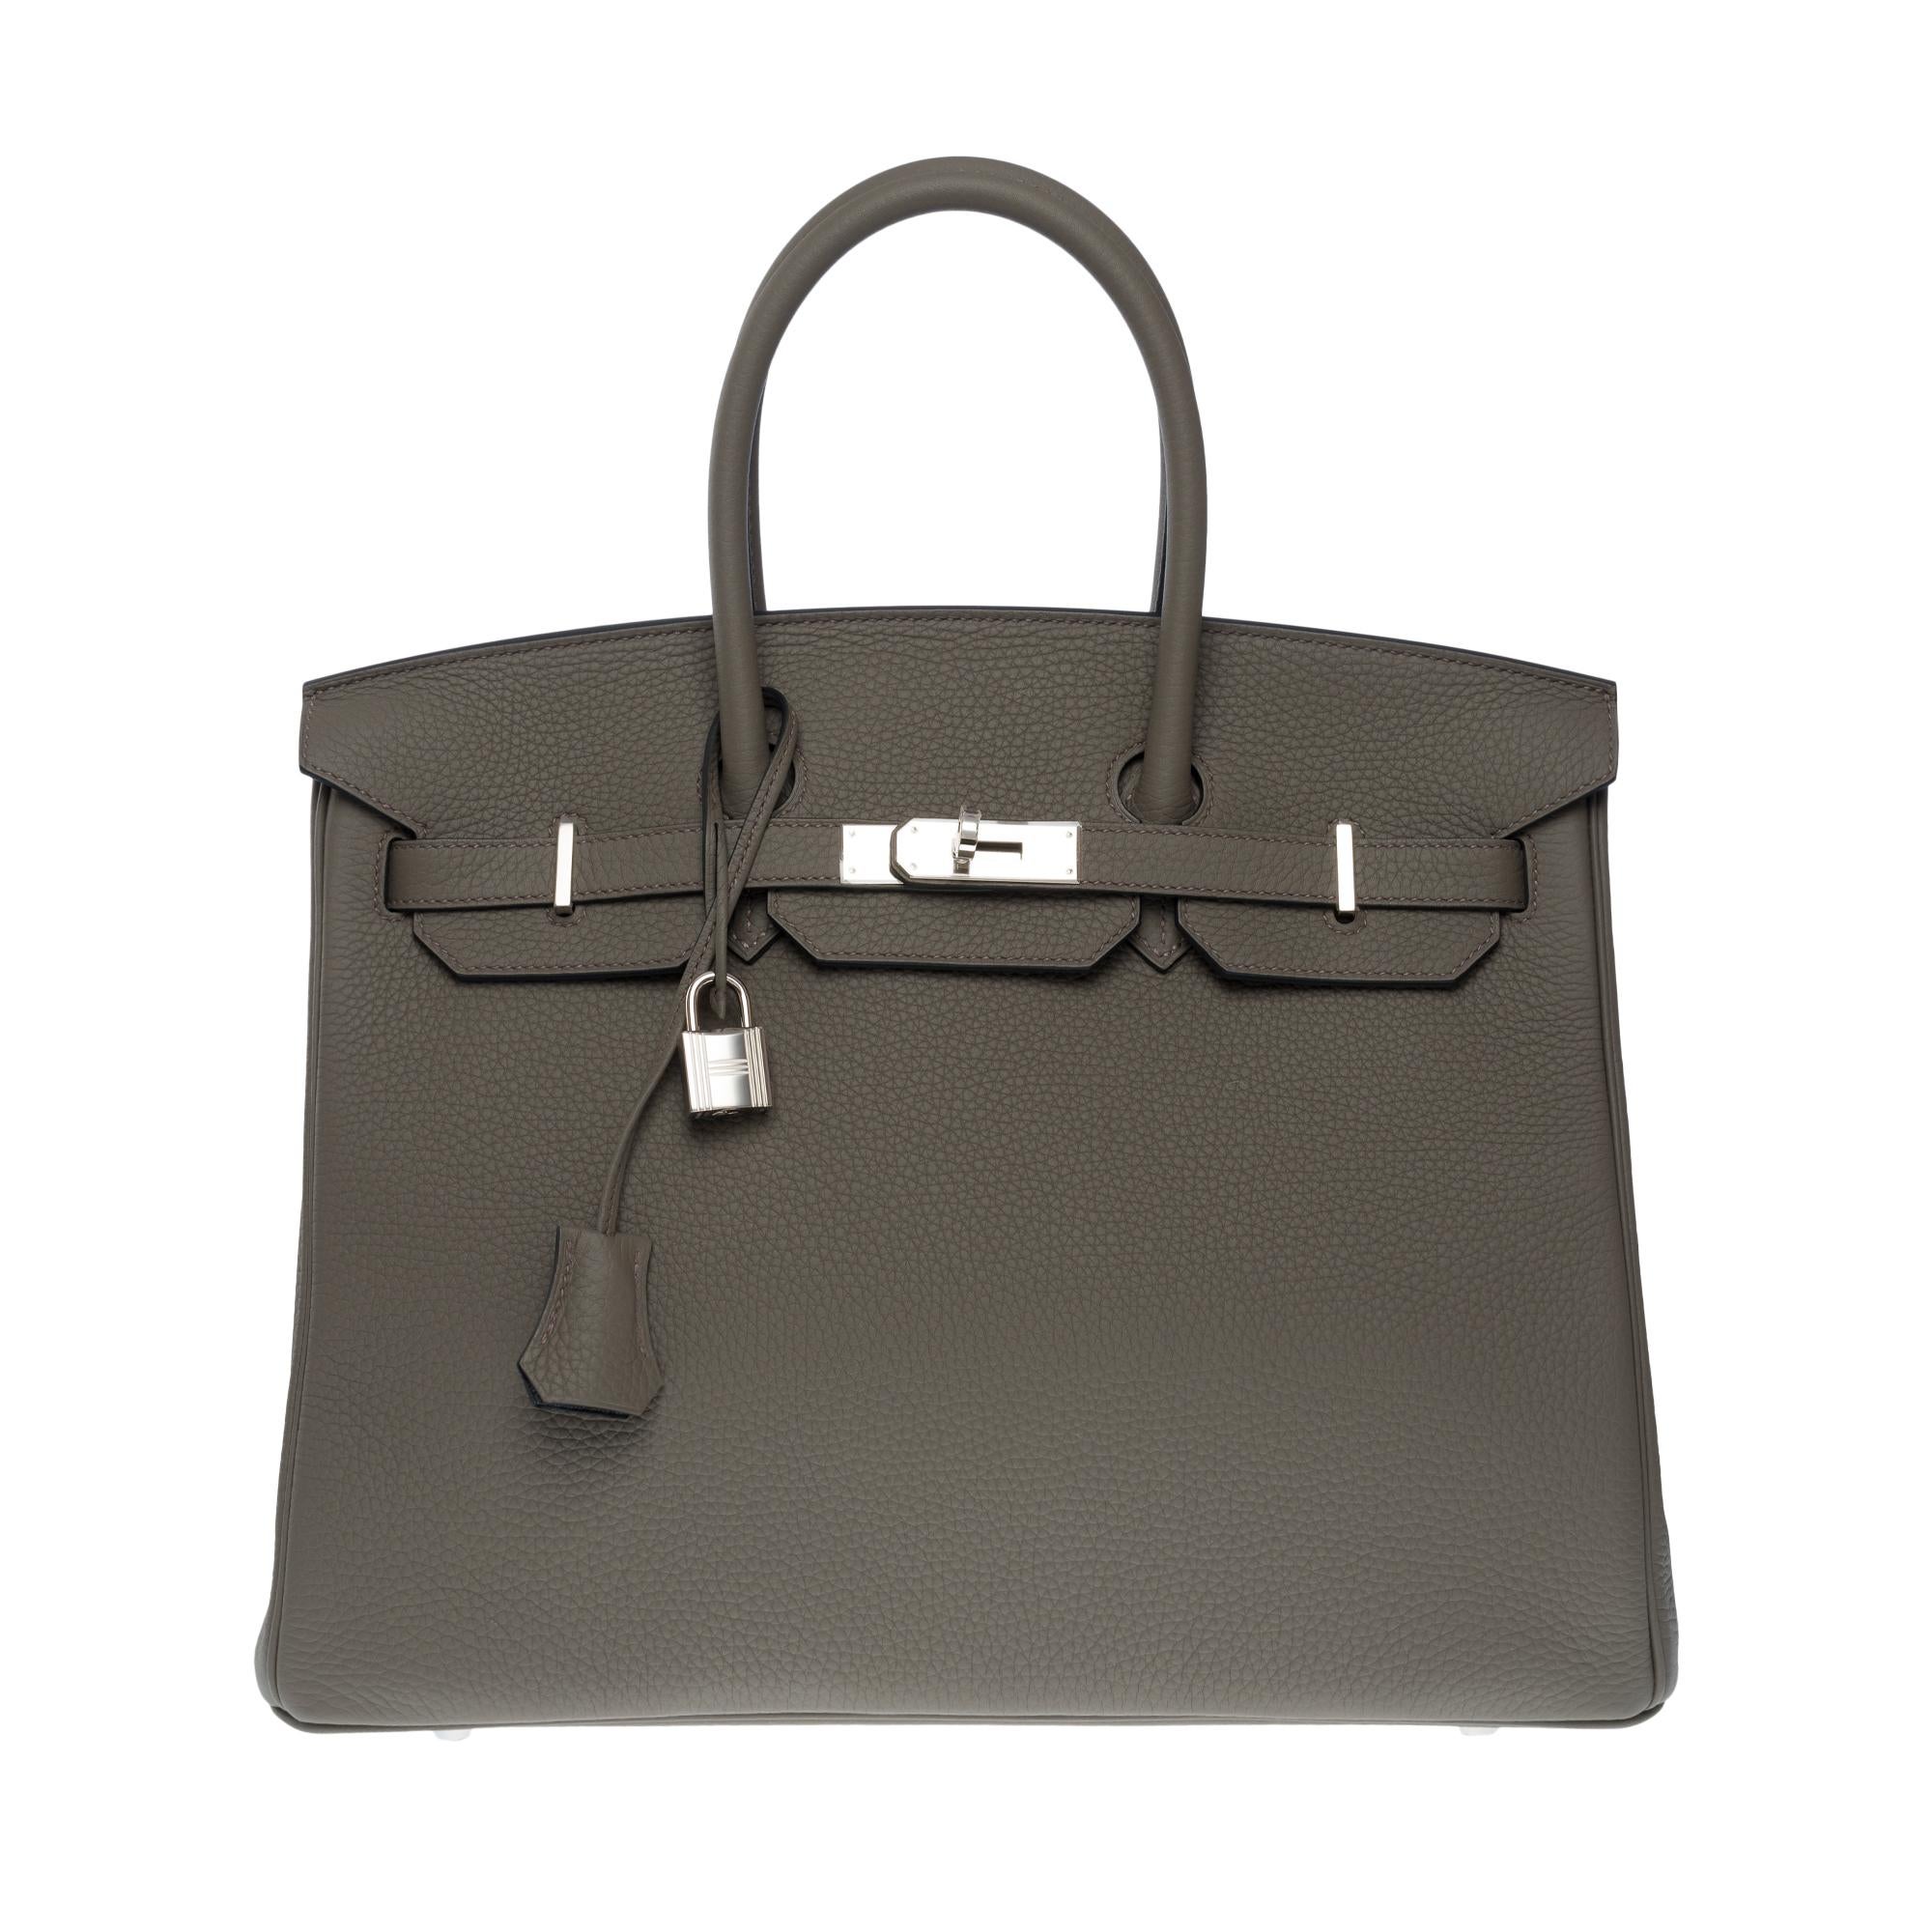 Rare Hermès Birkin 35 HSS (Special Order) handbag in Etain Togo leather, SHW In New Condition In Paris, IDF